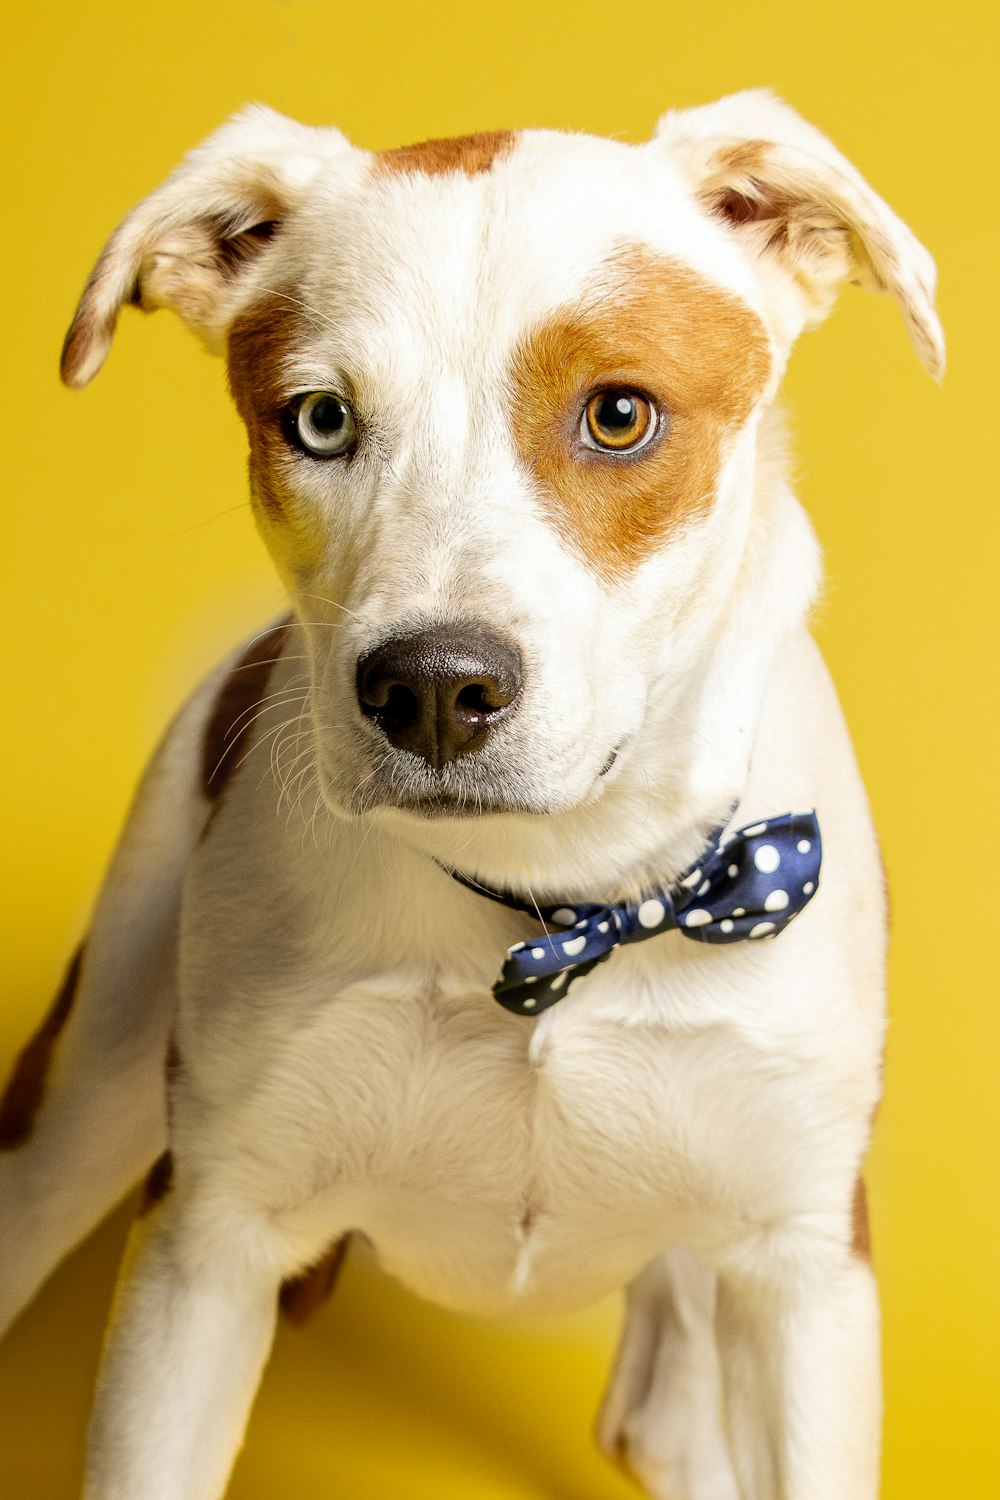 a dog with a blue collar